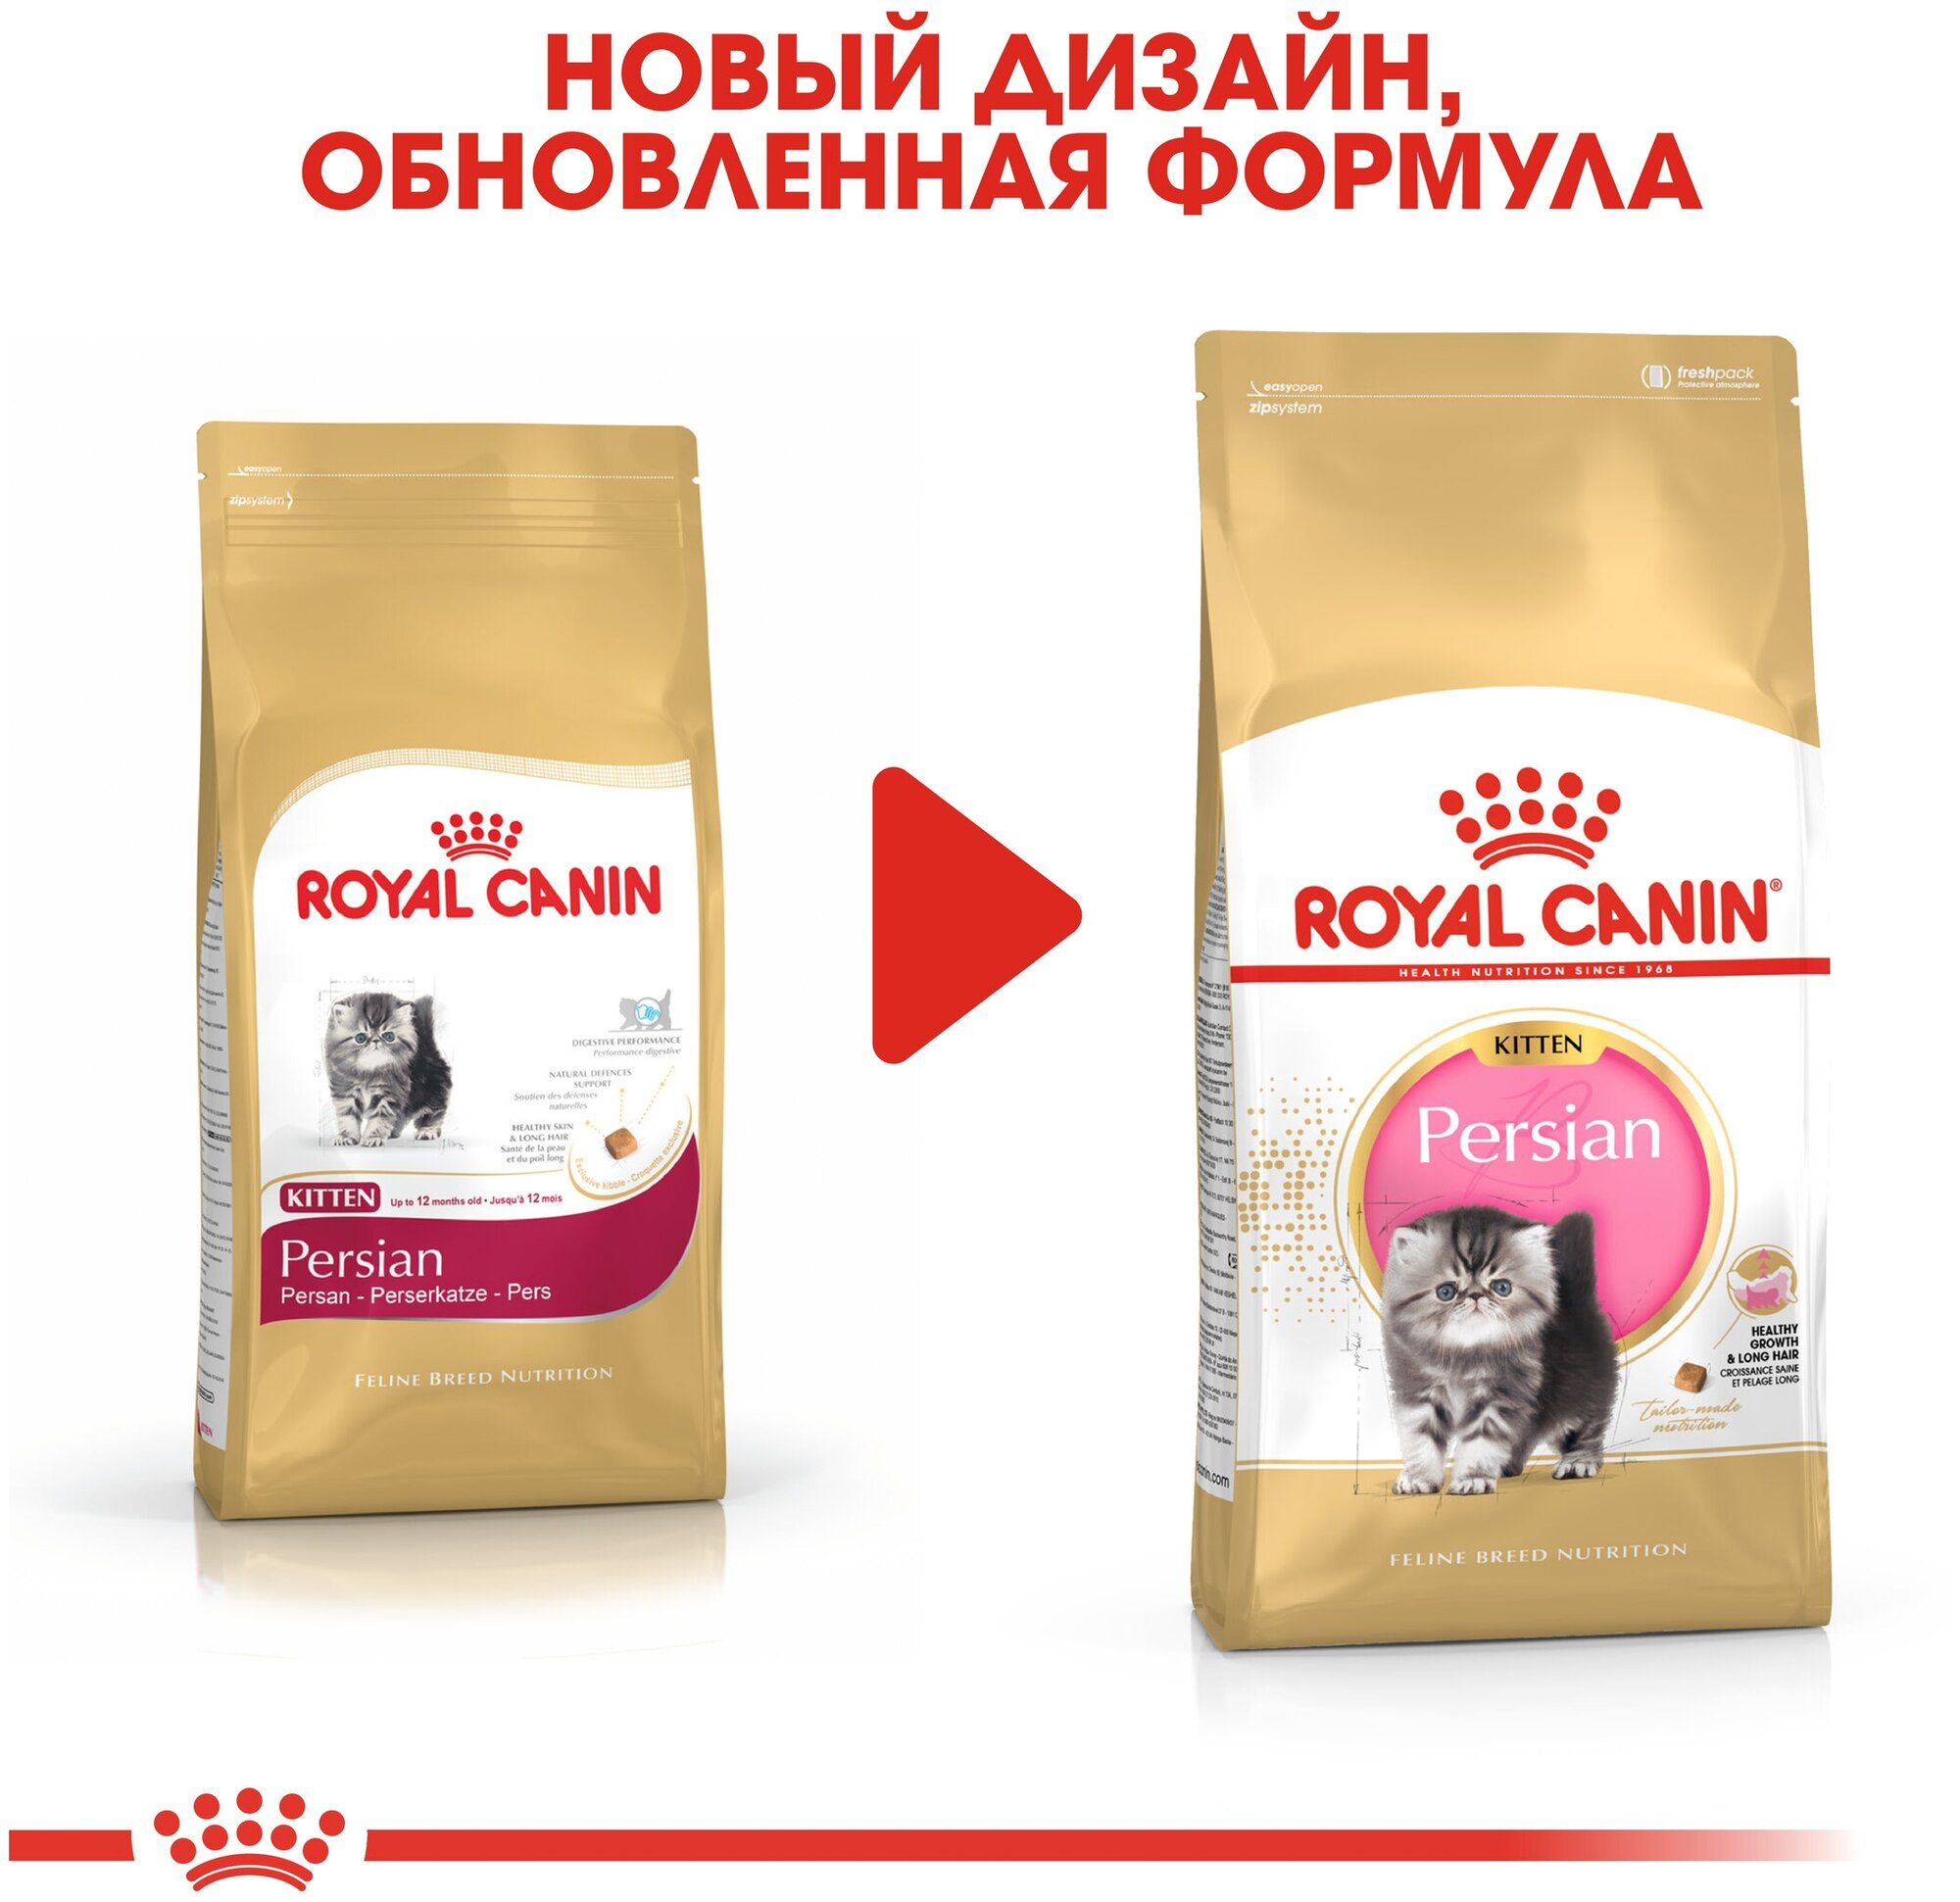 Сухой корм для котят Royal Canin KITTEN PERSIAN (киттен персиан) Birth & Growth Специальное питание для котят персидской породы в возрасте от 4 до 12 месяцев 2 кг - фотография № 16